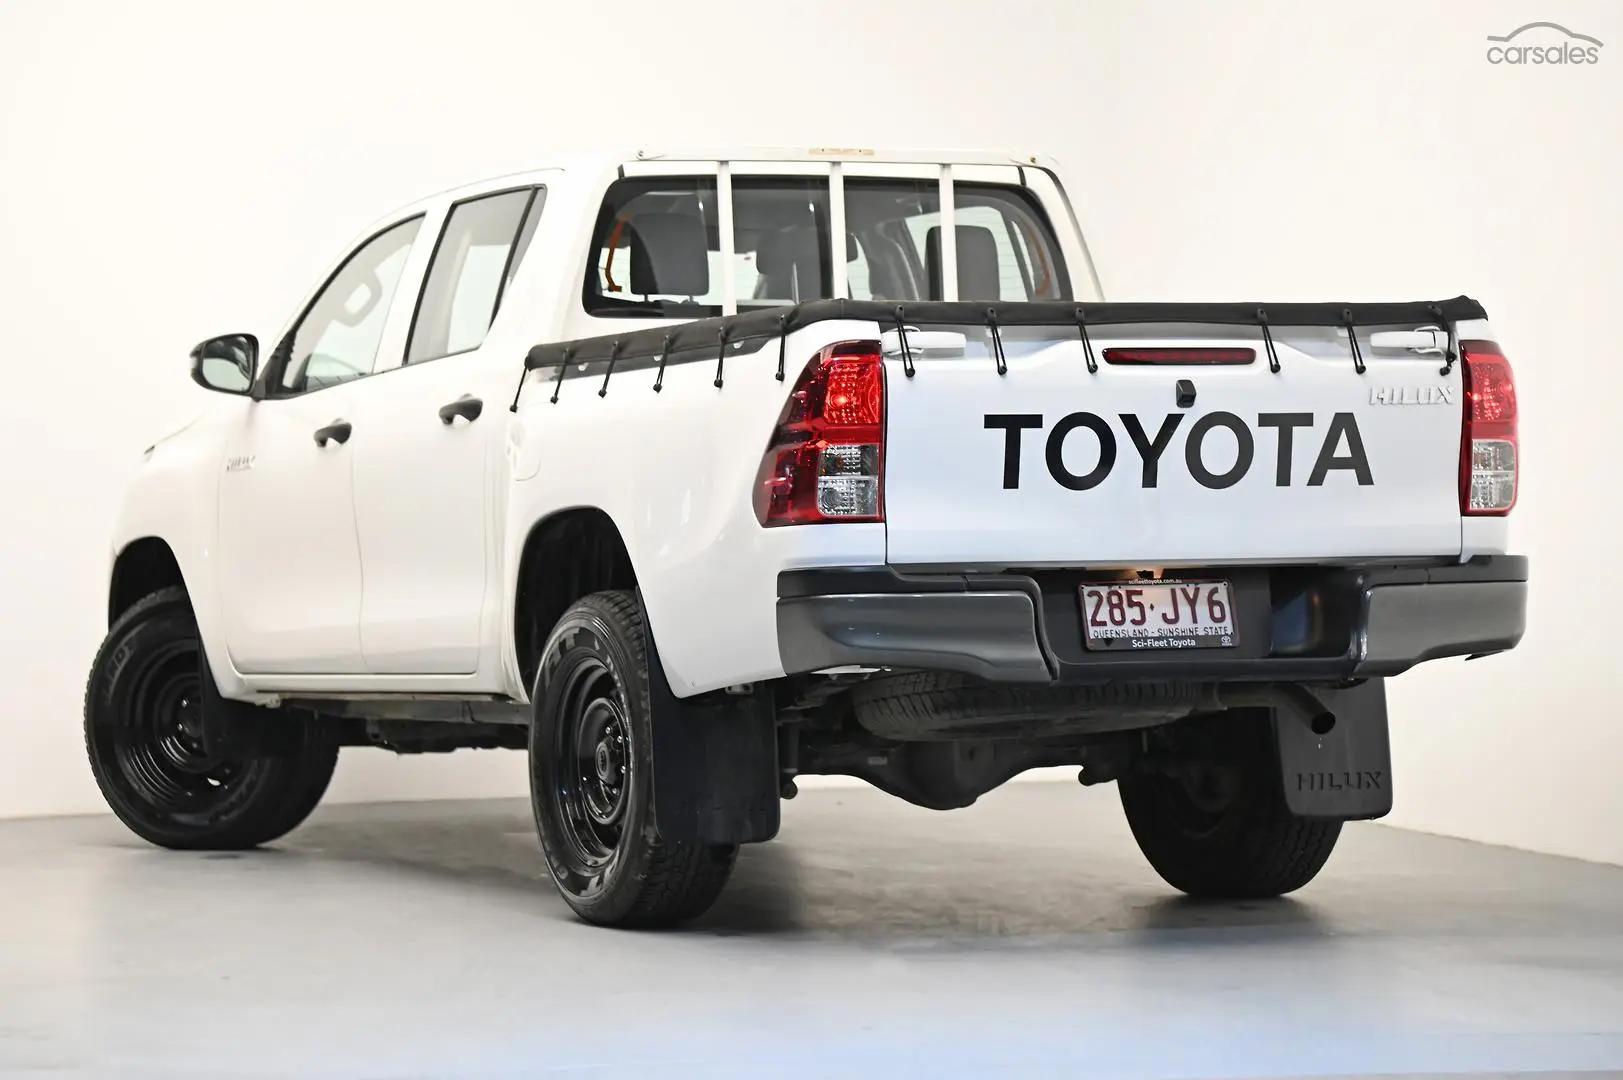 2019 Toyota Hilux Image 5